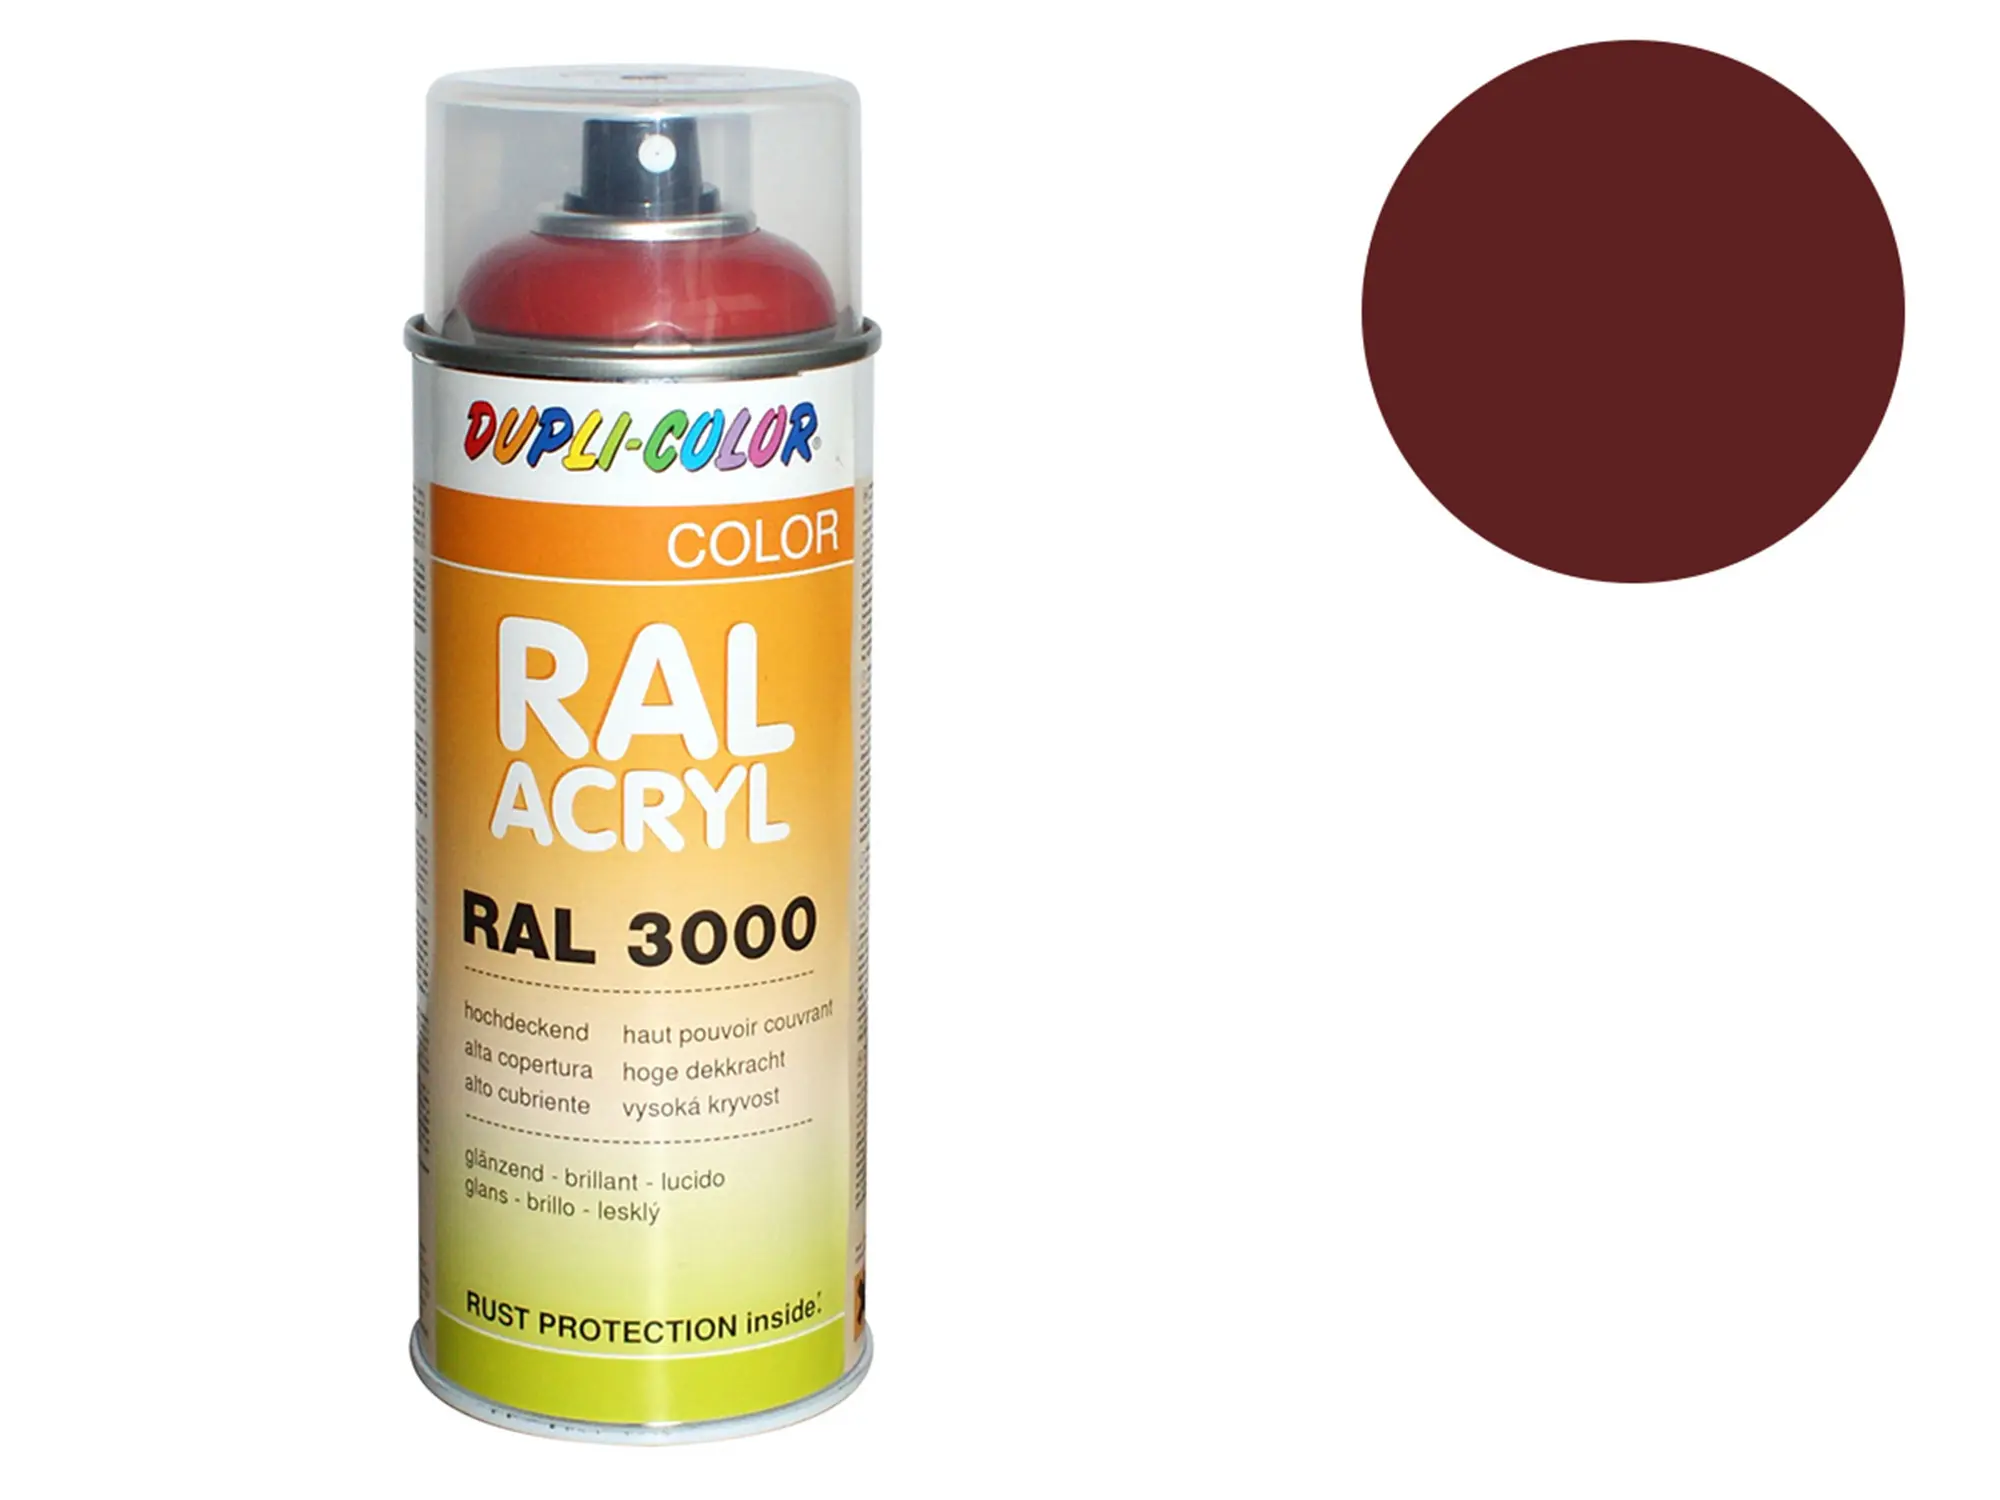 Dupli-Color Acryl-Spray RAL 3009 oxidrot, glänzend - 400 ml, Art.-Nr.: 10064770 - Bild 1